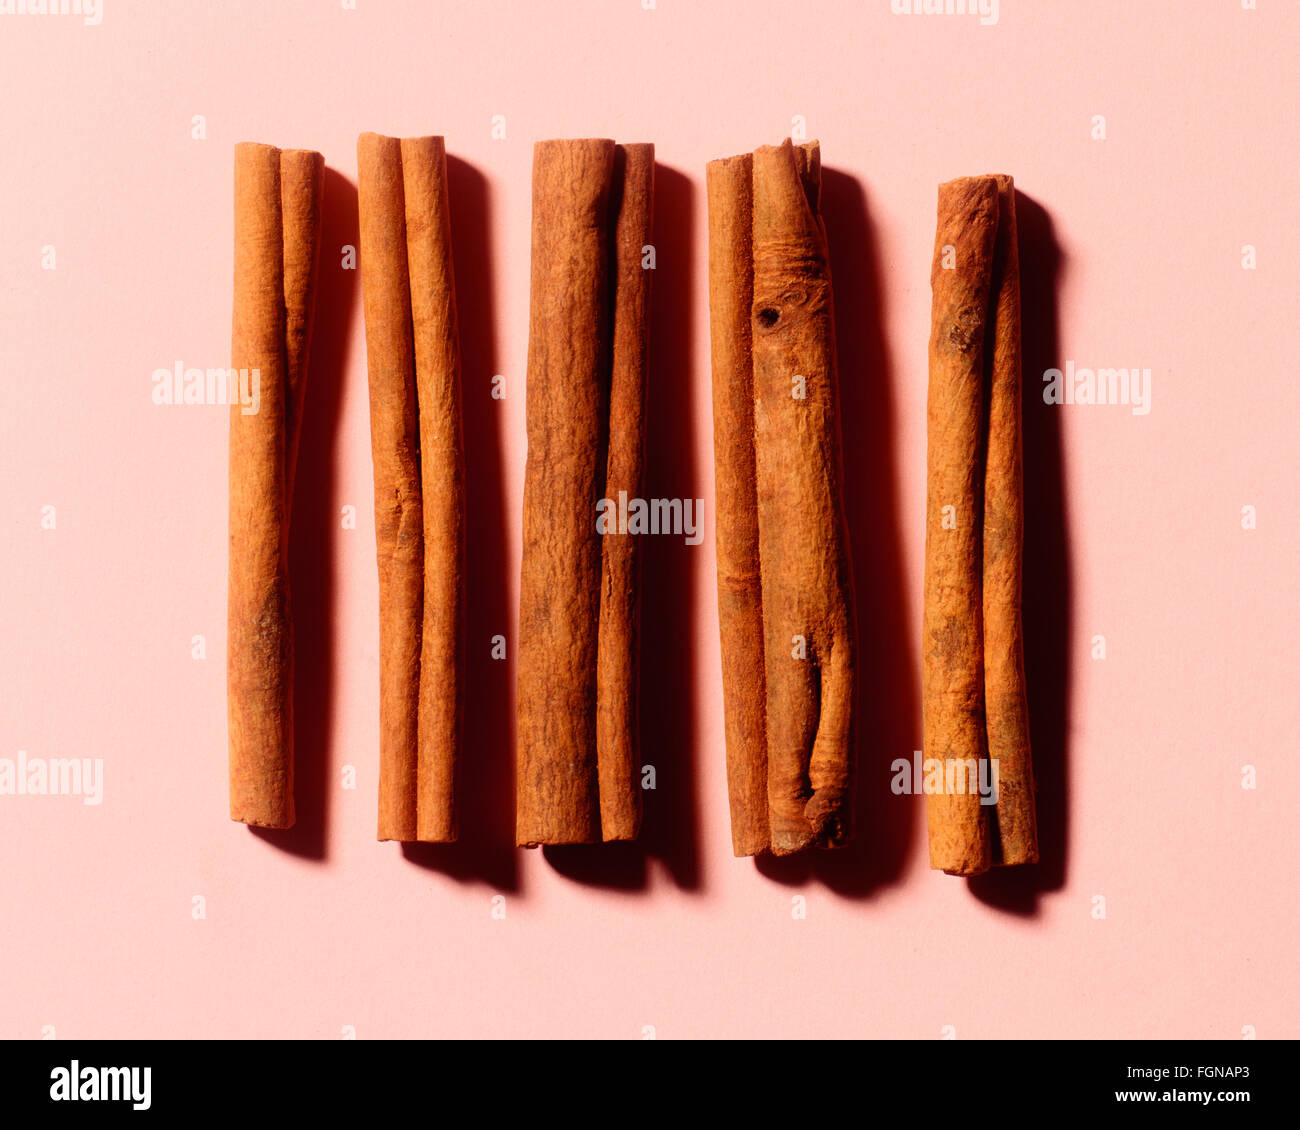 Five cinnamon sticks on a pink background Stock Photo